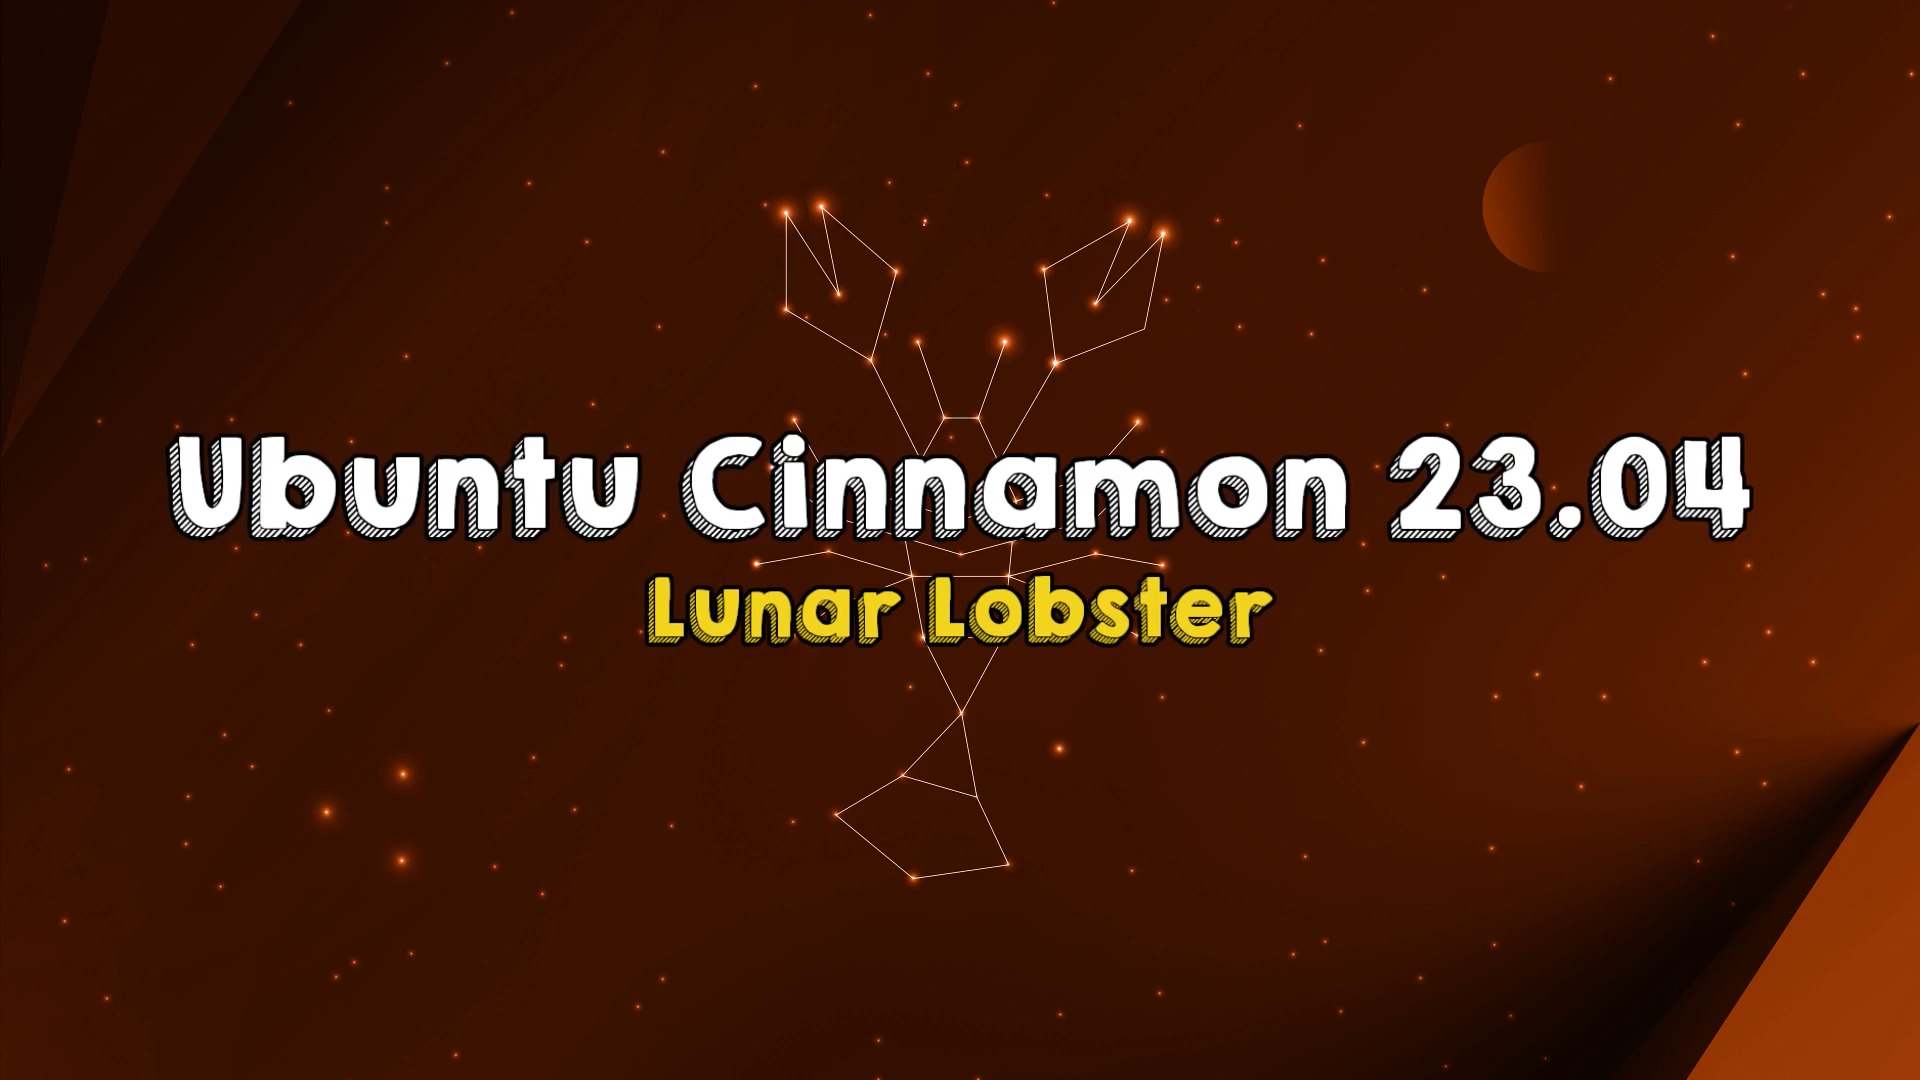 Ubuntu Cinnamon 23.04 featured image